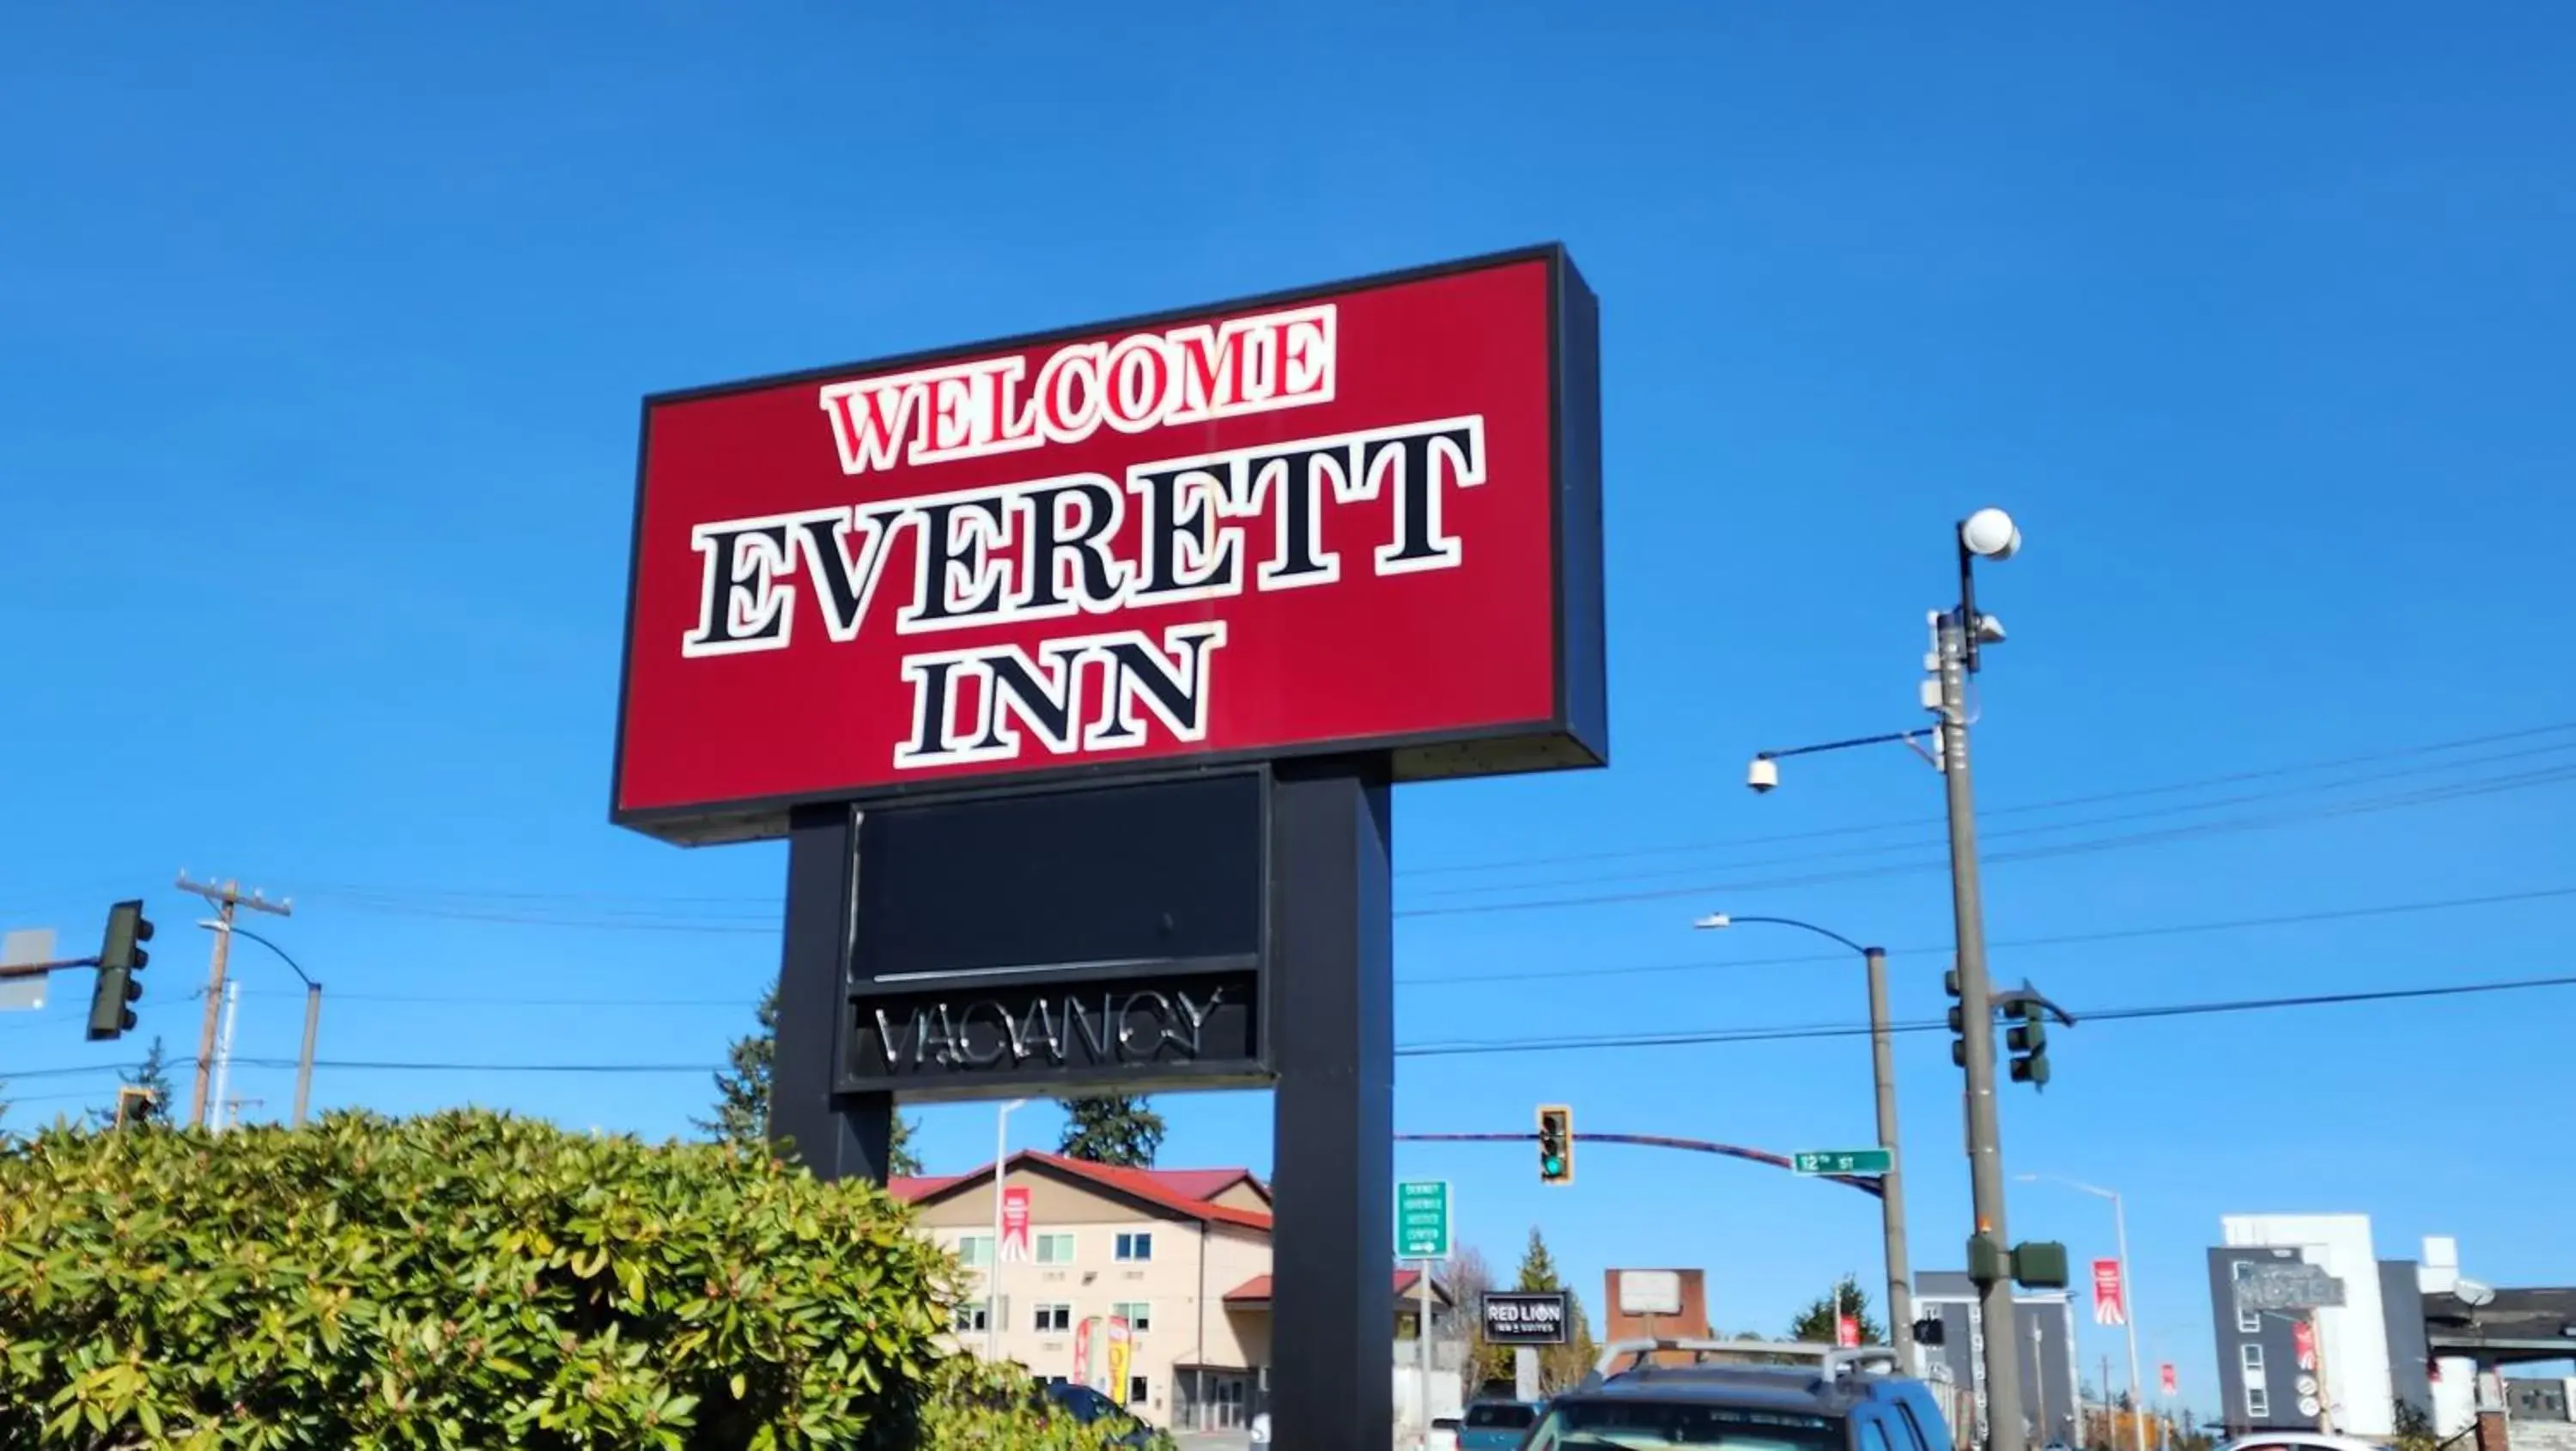 Property logo or sign in Welcome Everett Inn